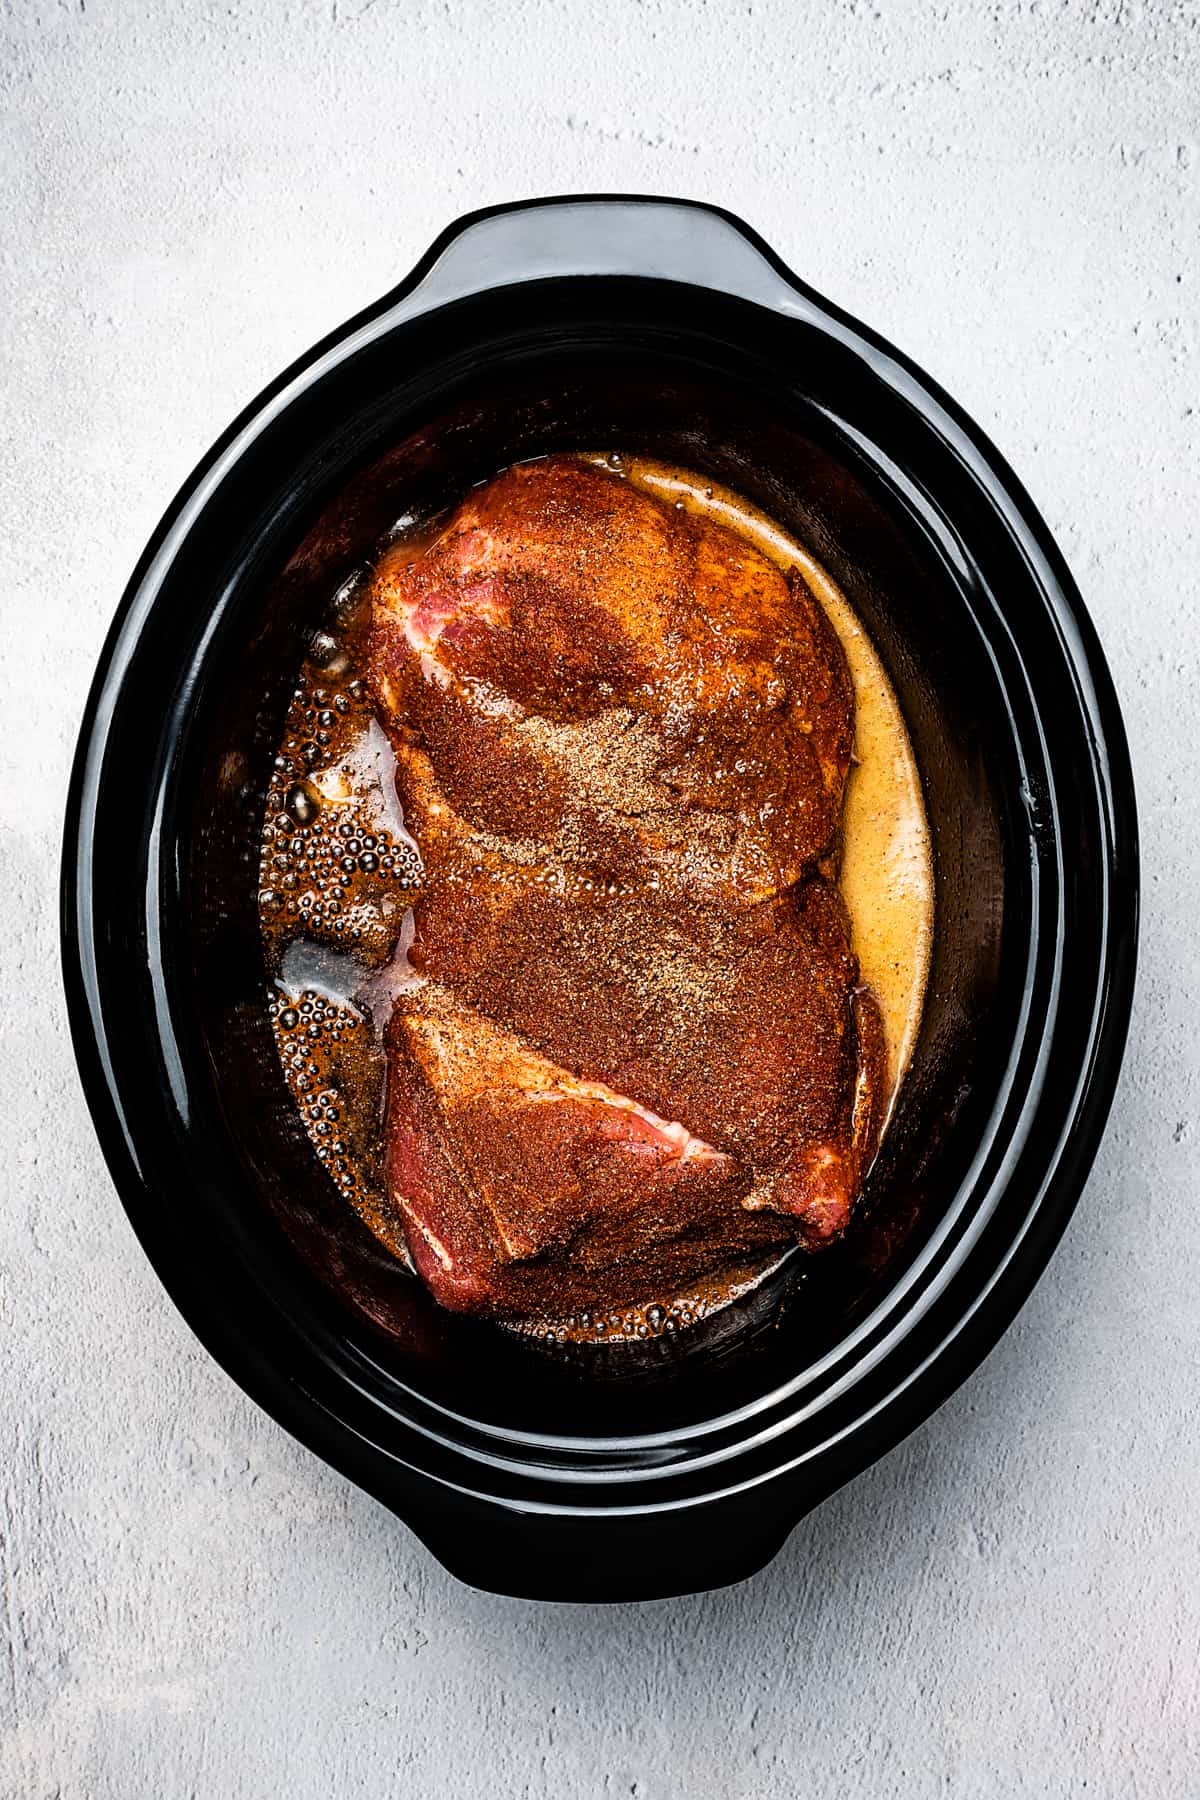 Fully-cooked pork shoulder in a slow cooker insert.